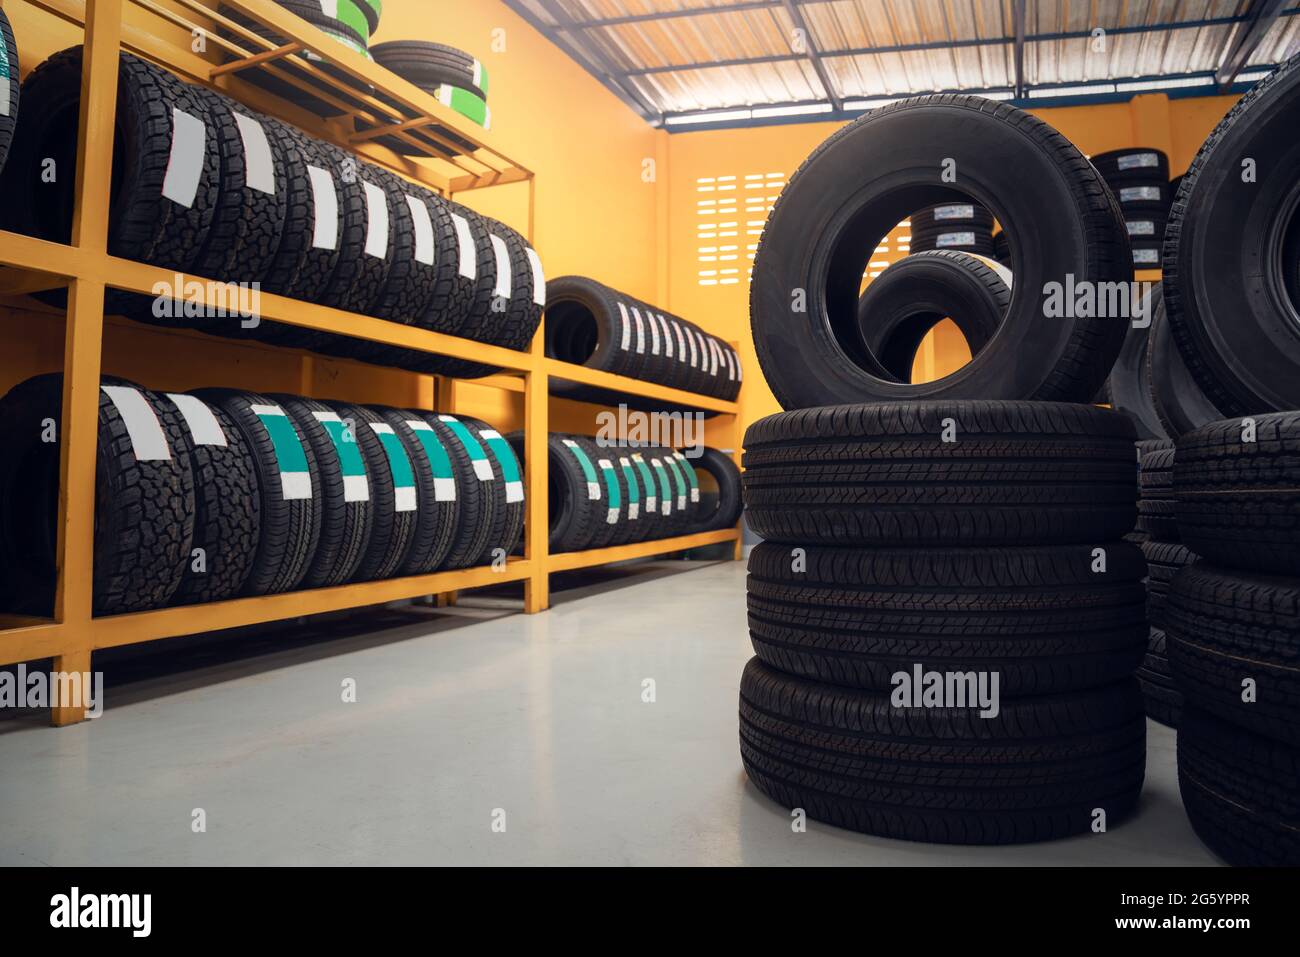 Car tyres rack -Fotos und -Bildmaterial in hoher Auflösung – Alamy